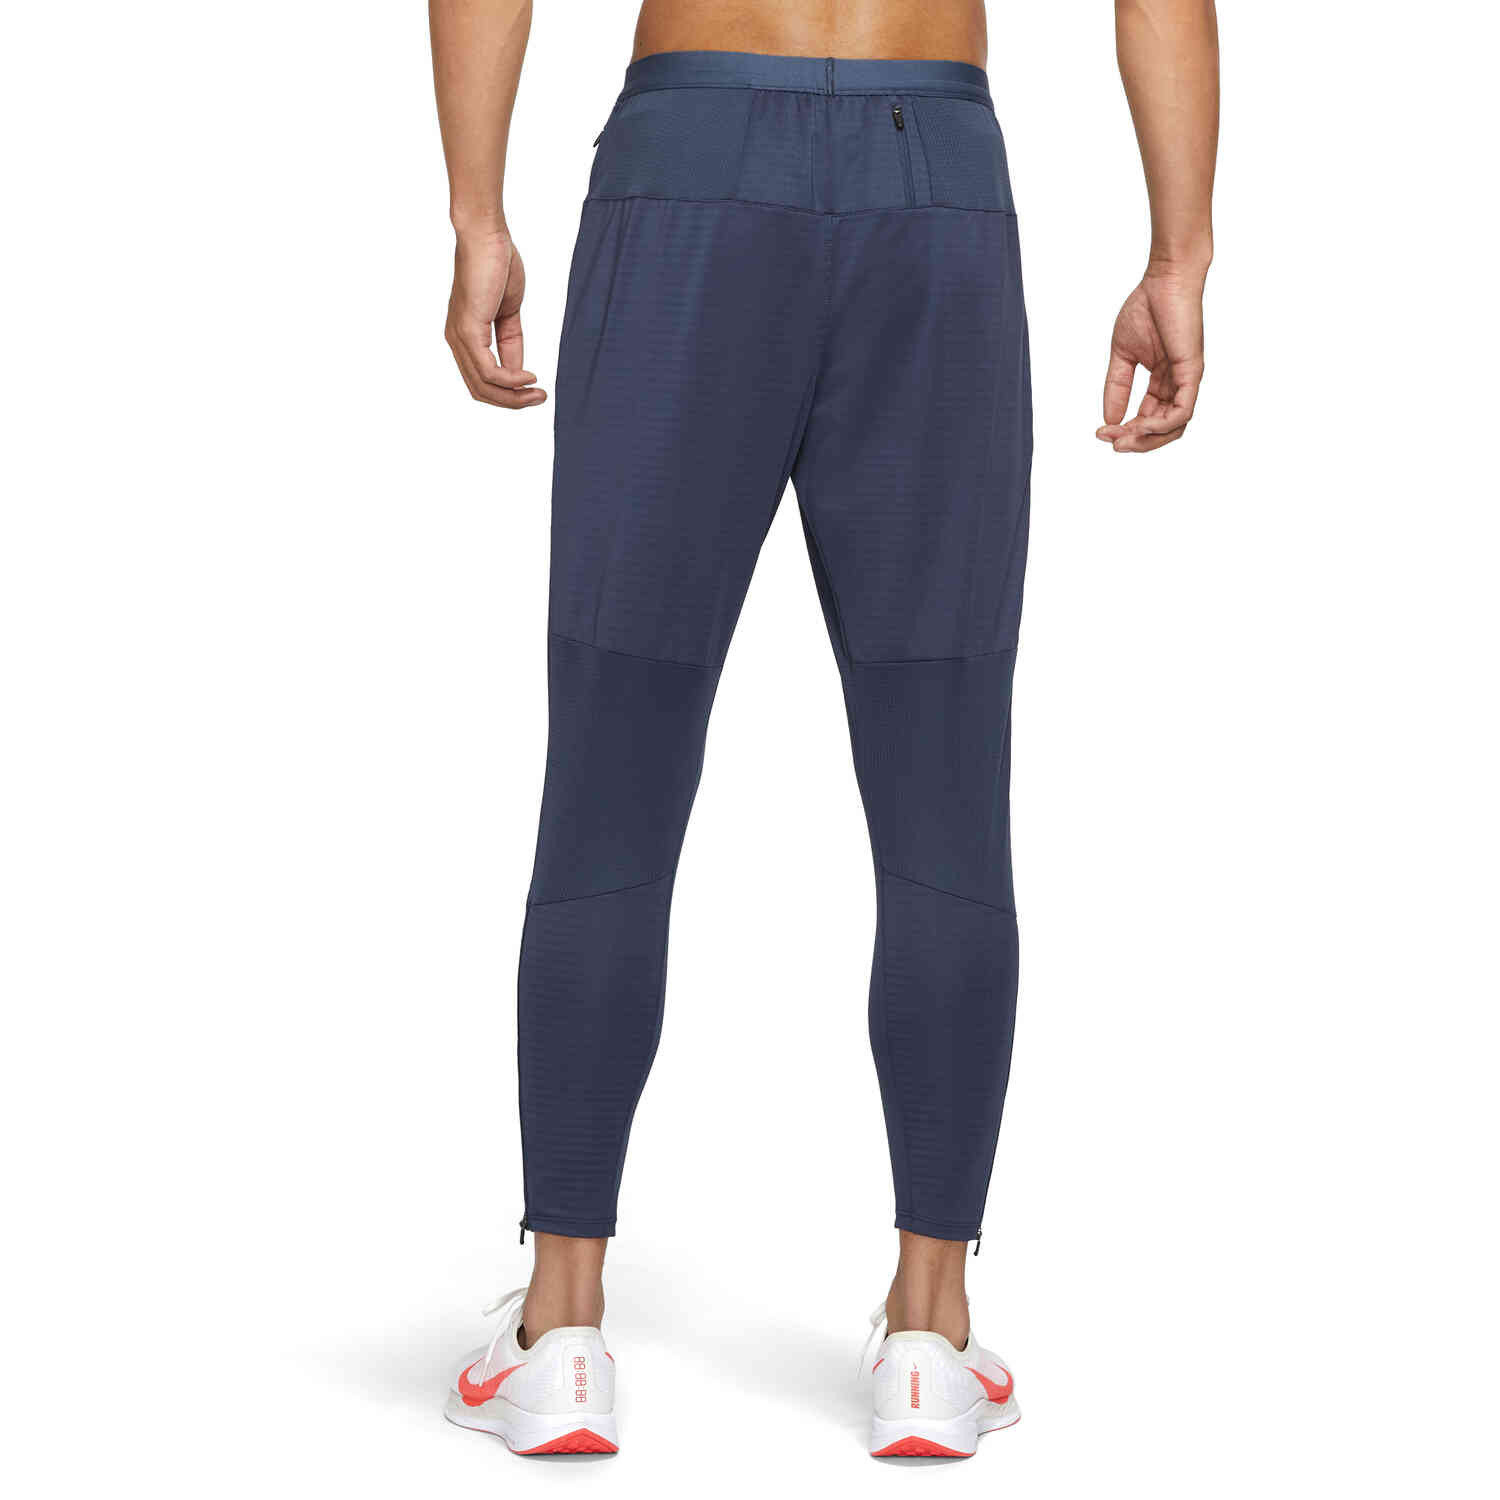 Nike Dri-Fit Phenom Elite Knit Running Pants - Running tights